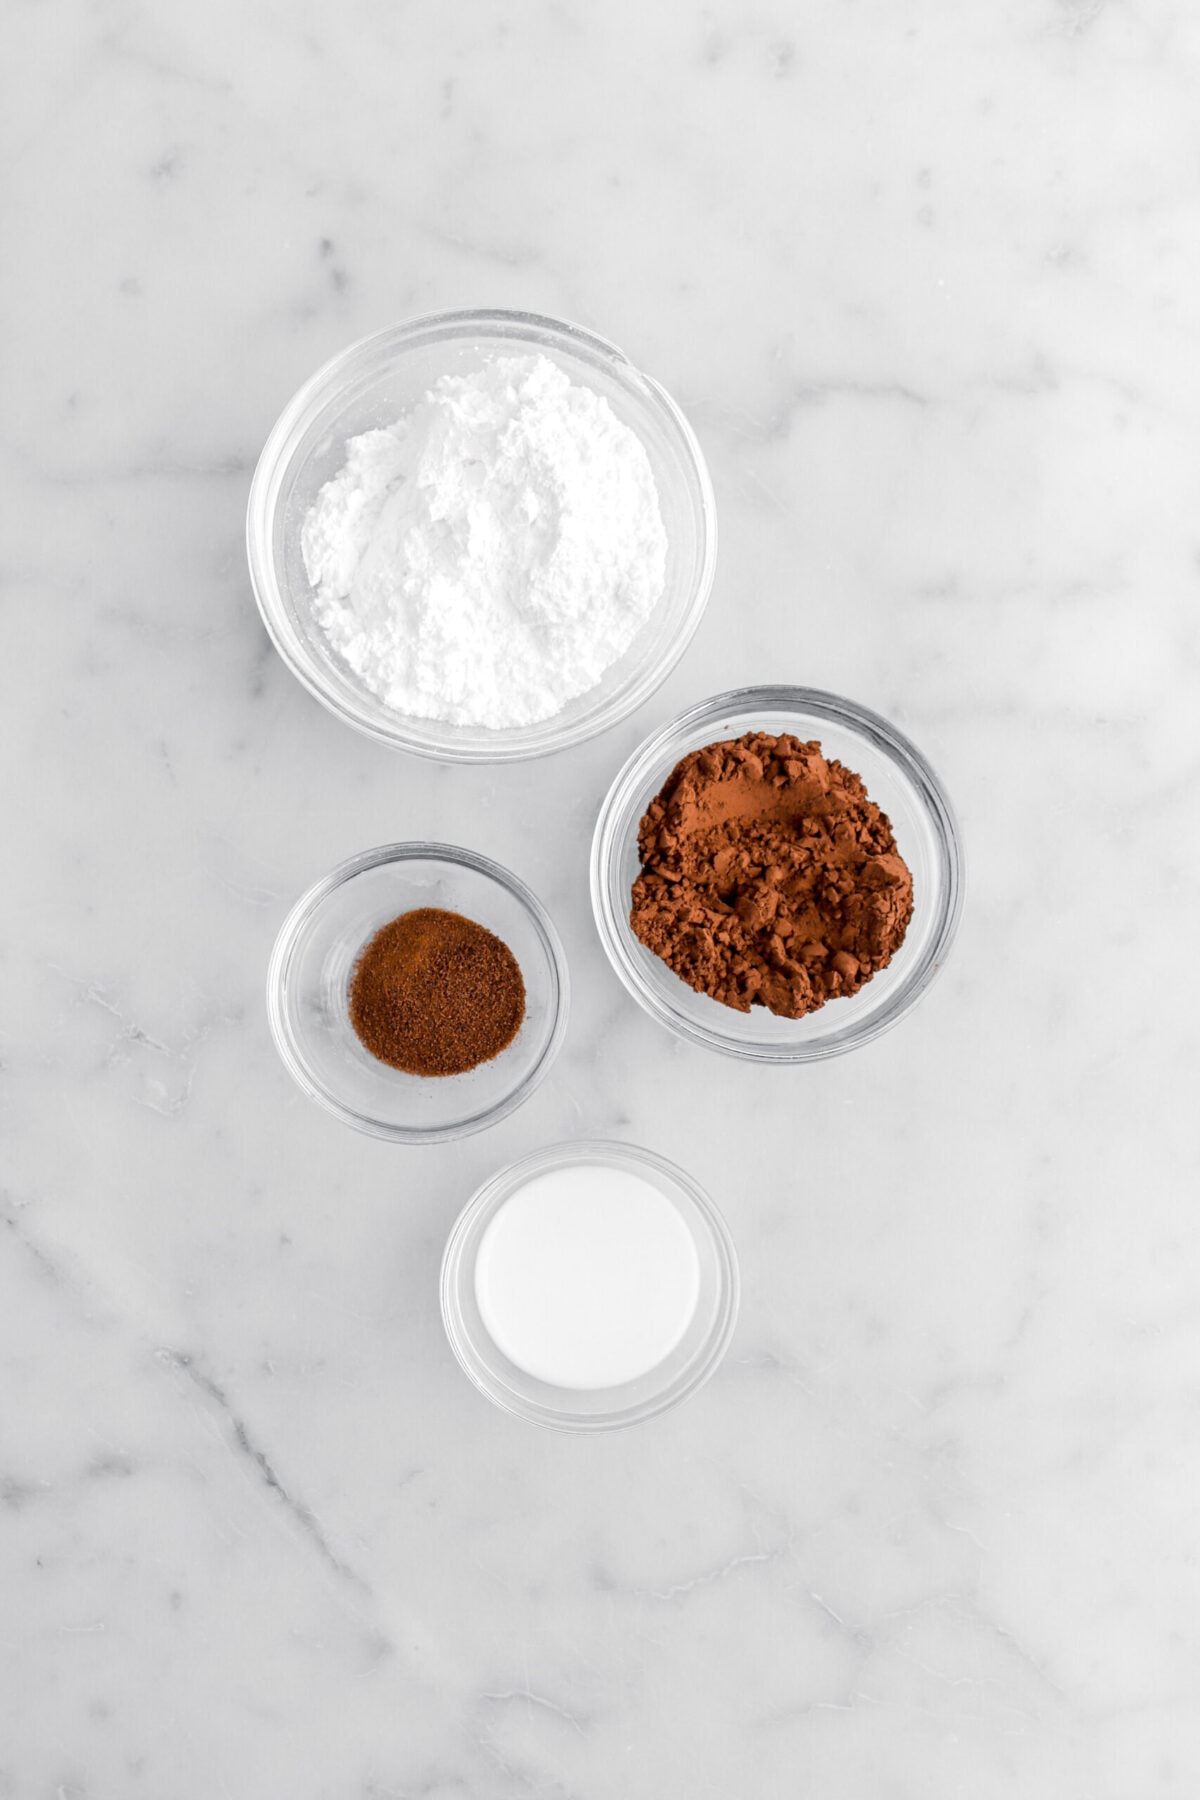 powdered sugar, cocoa powder, espresso powder, and milk on marble surface.